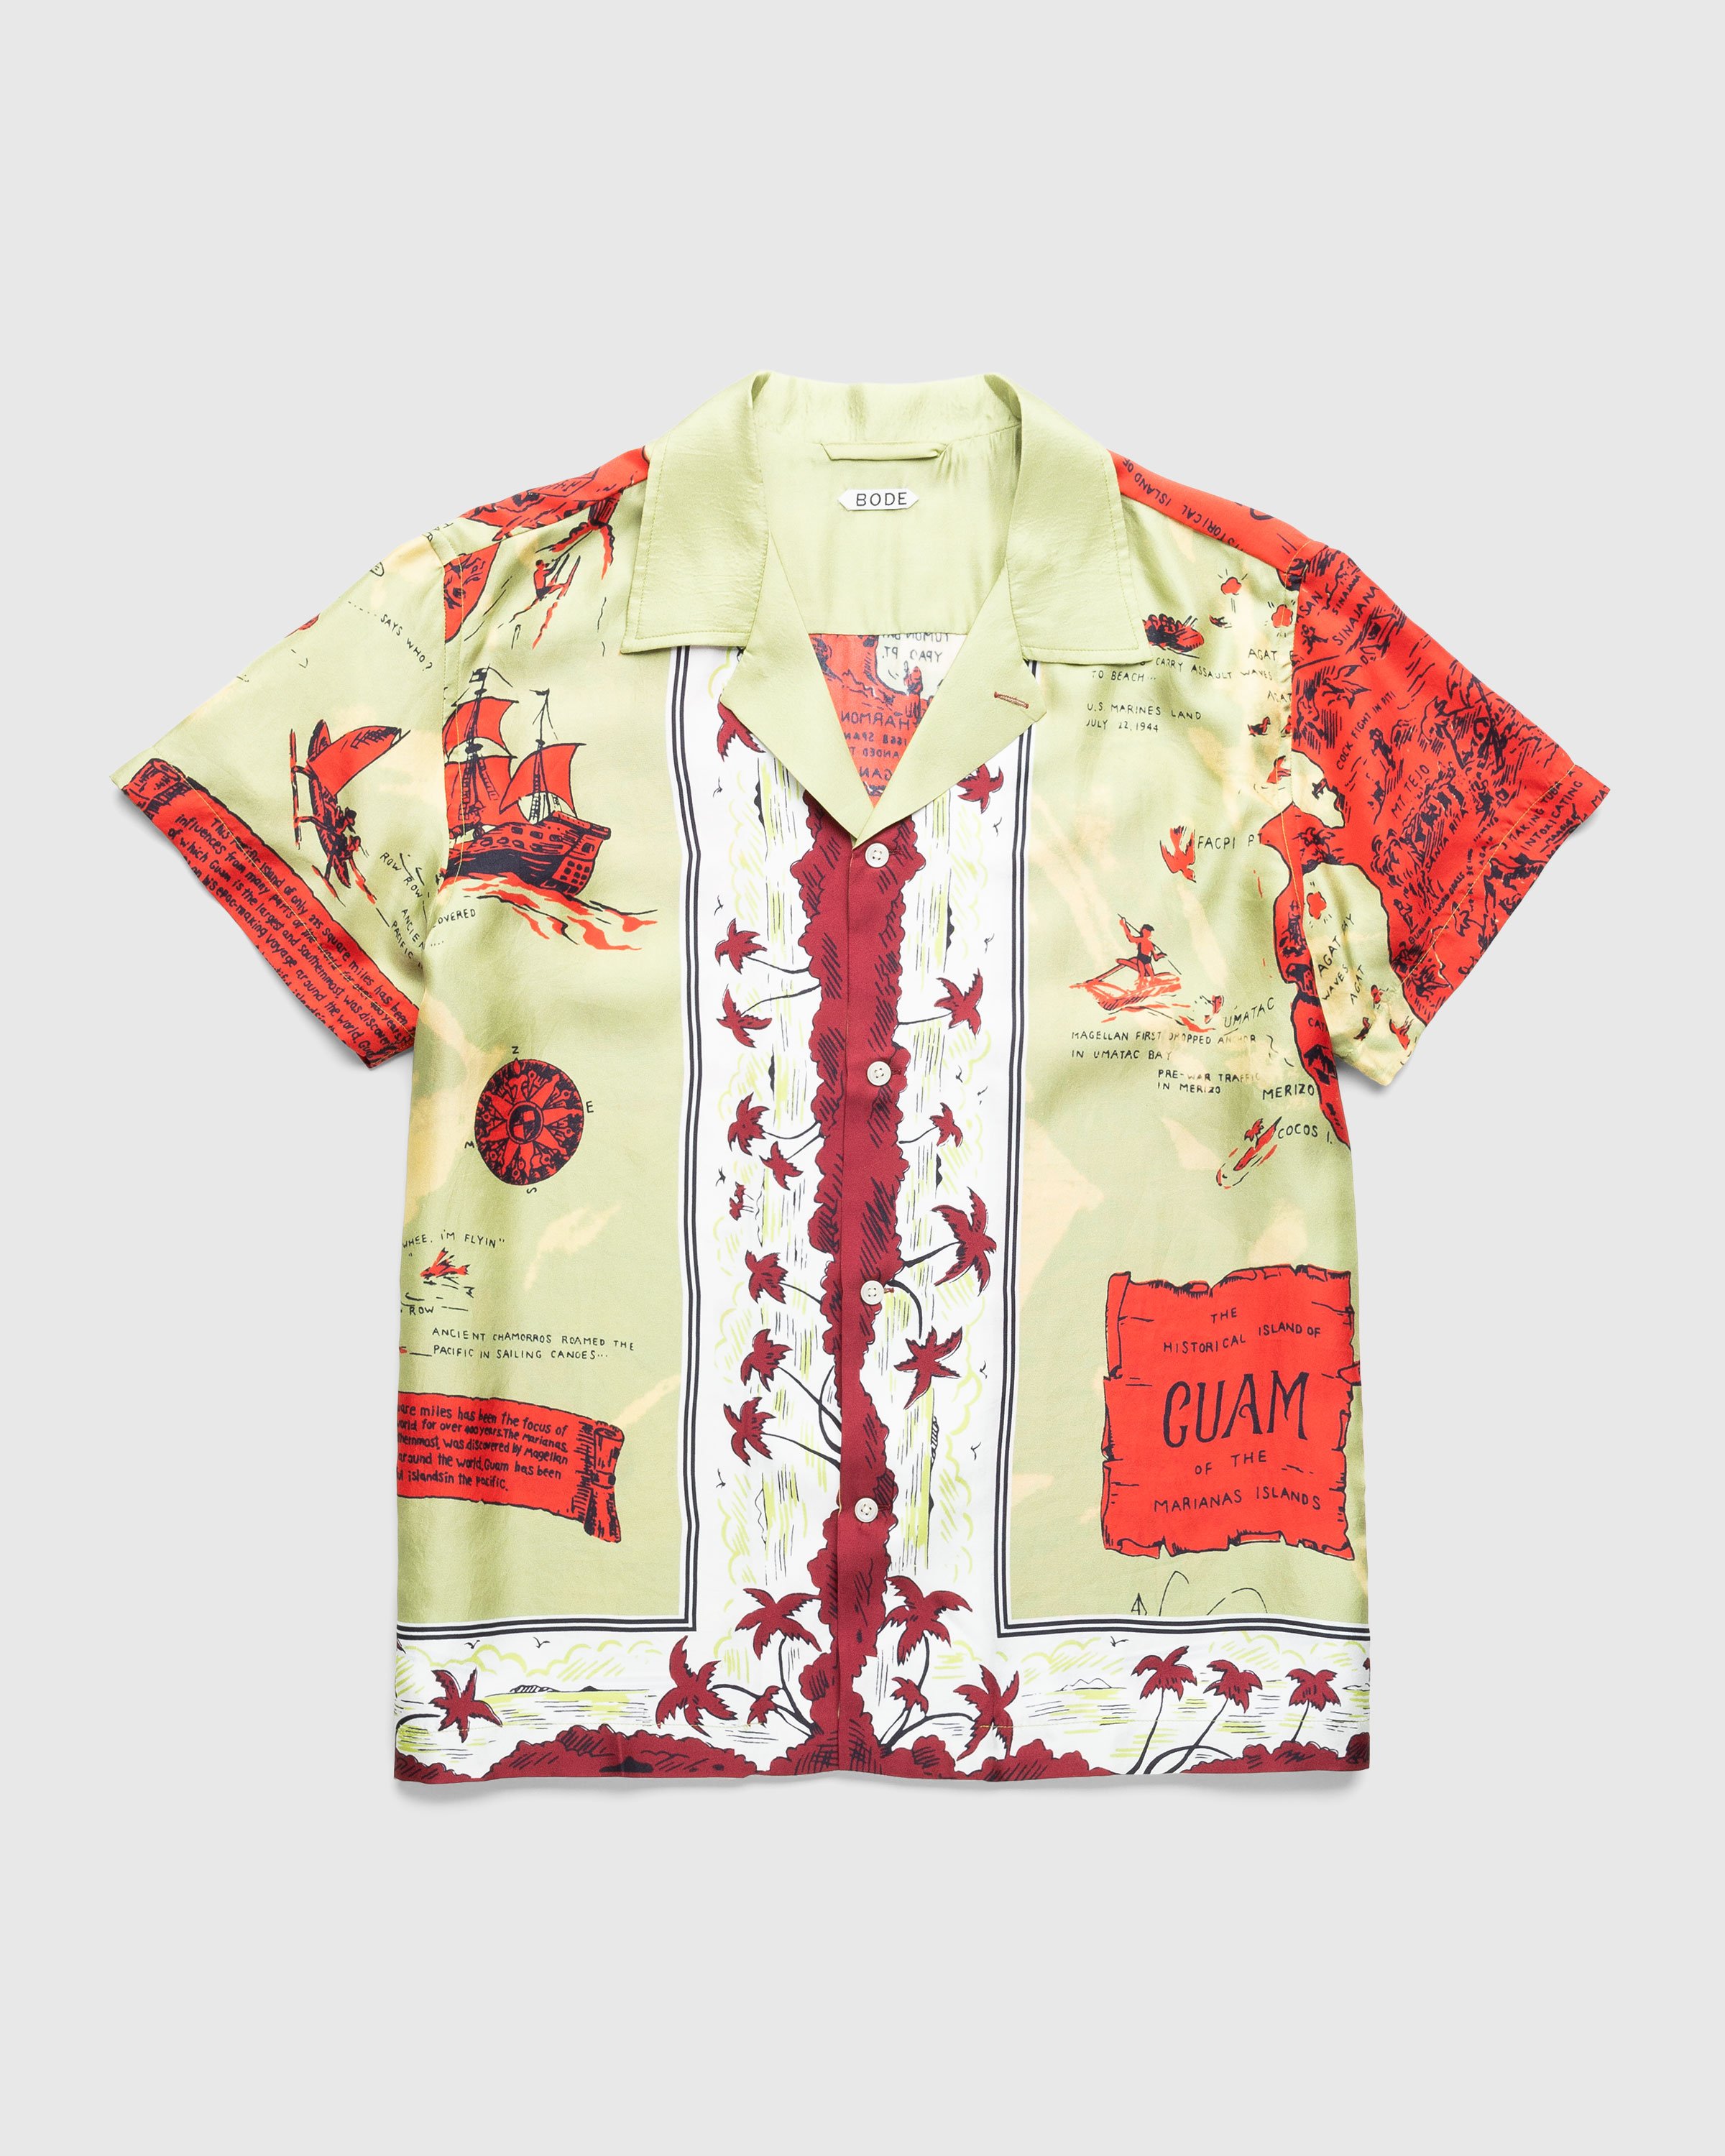 Bode - Guam Short-Sleeve Shirt Green/Red - Clothing - MULTI - Image 1